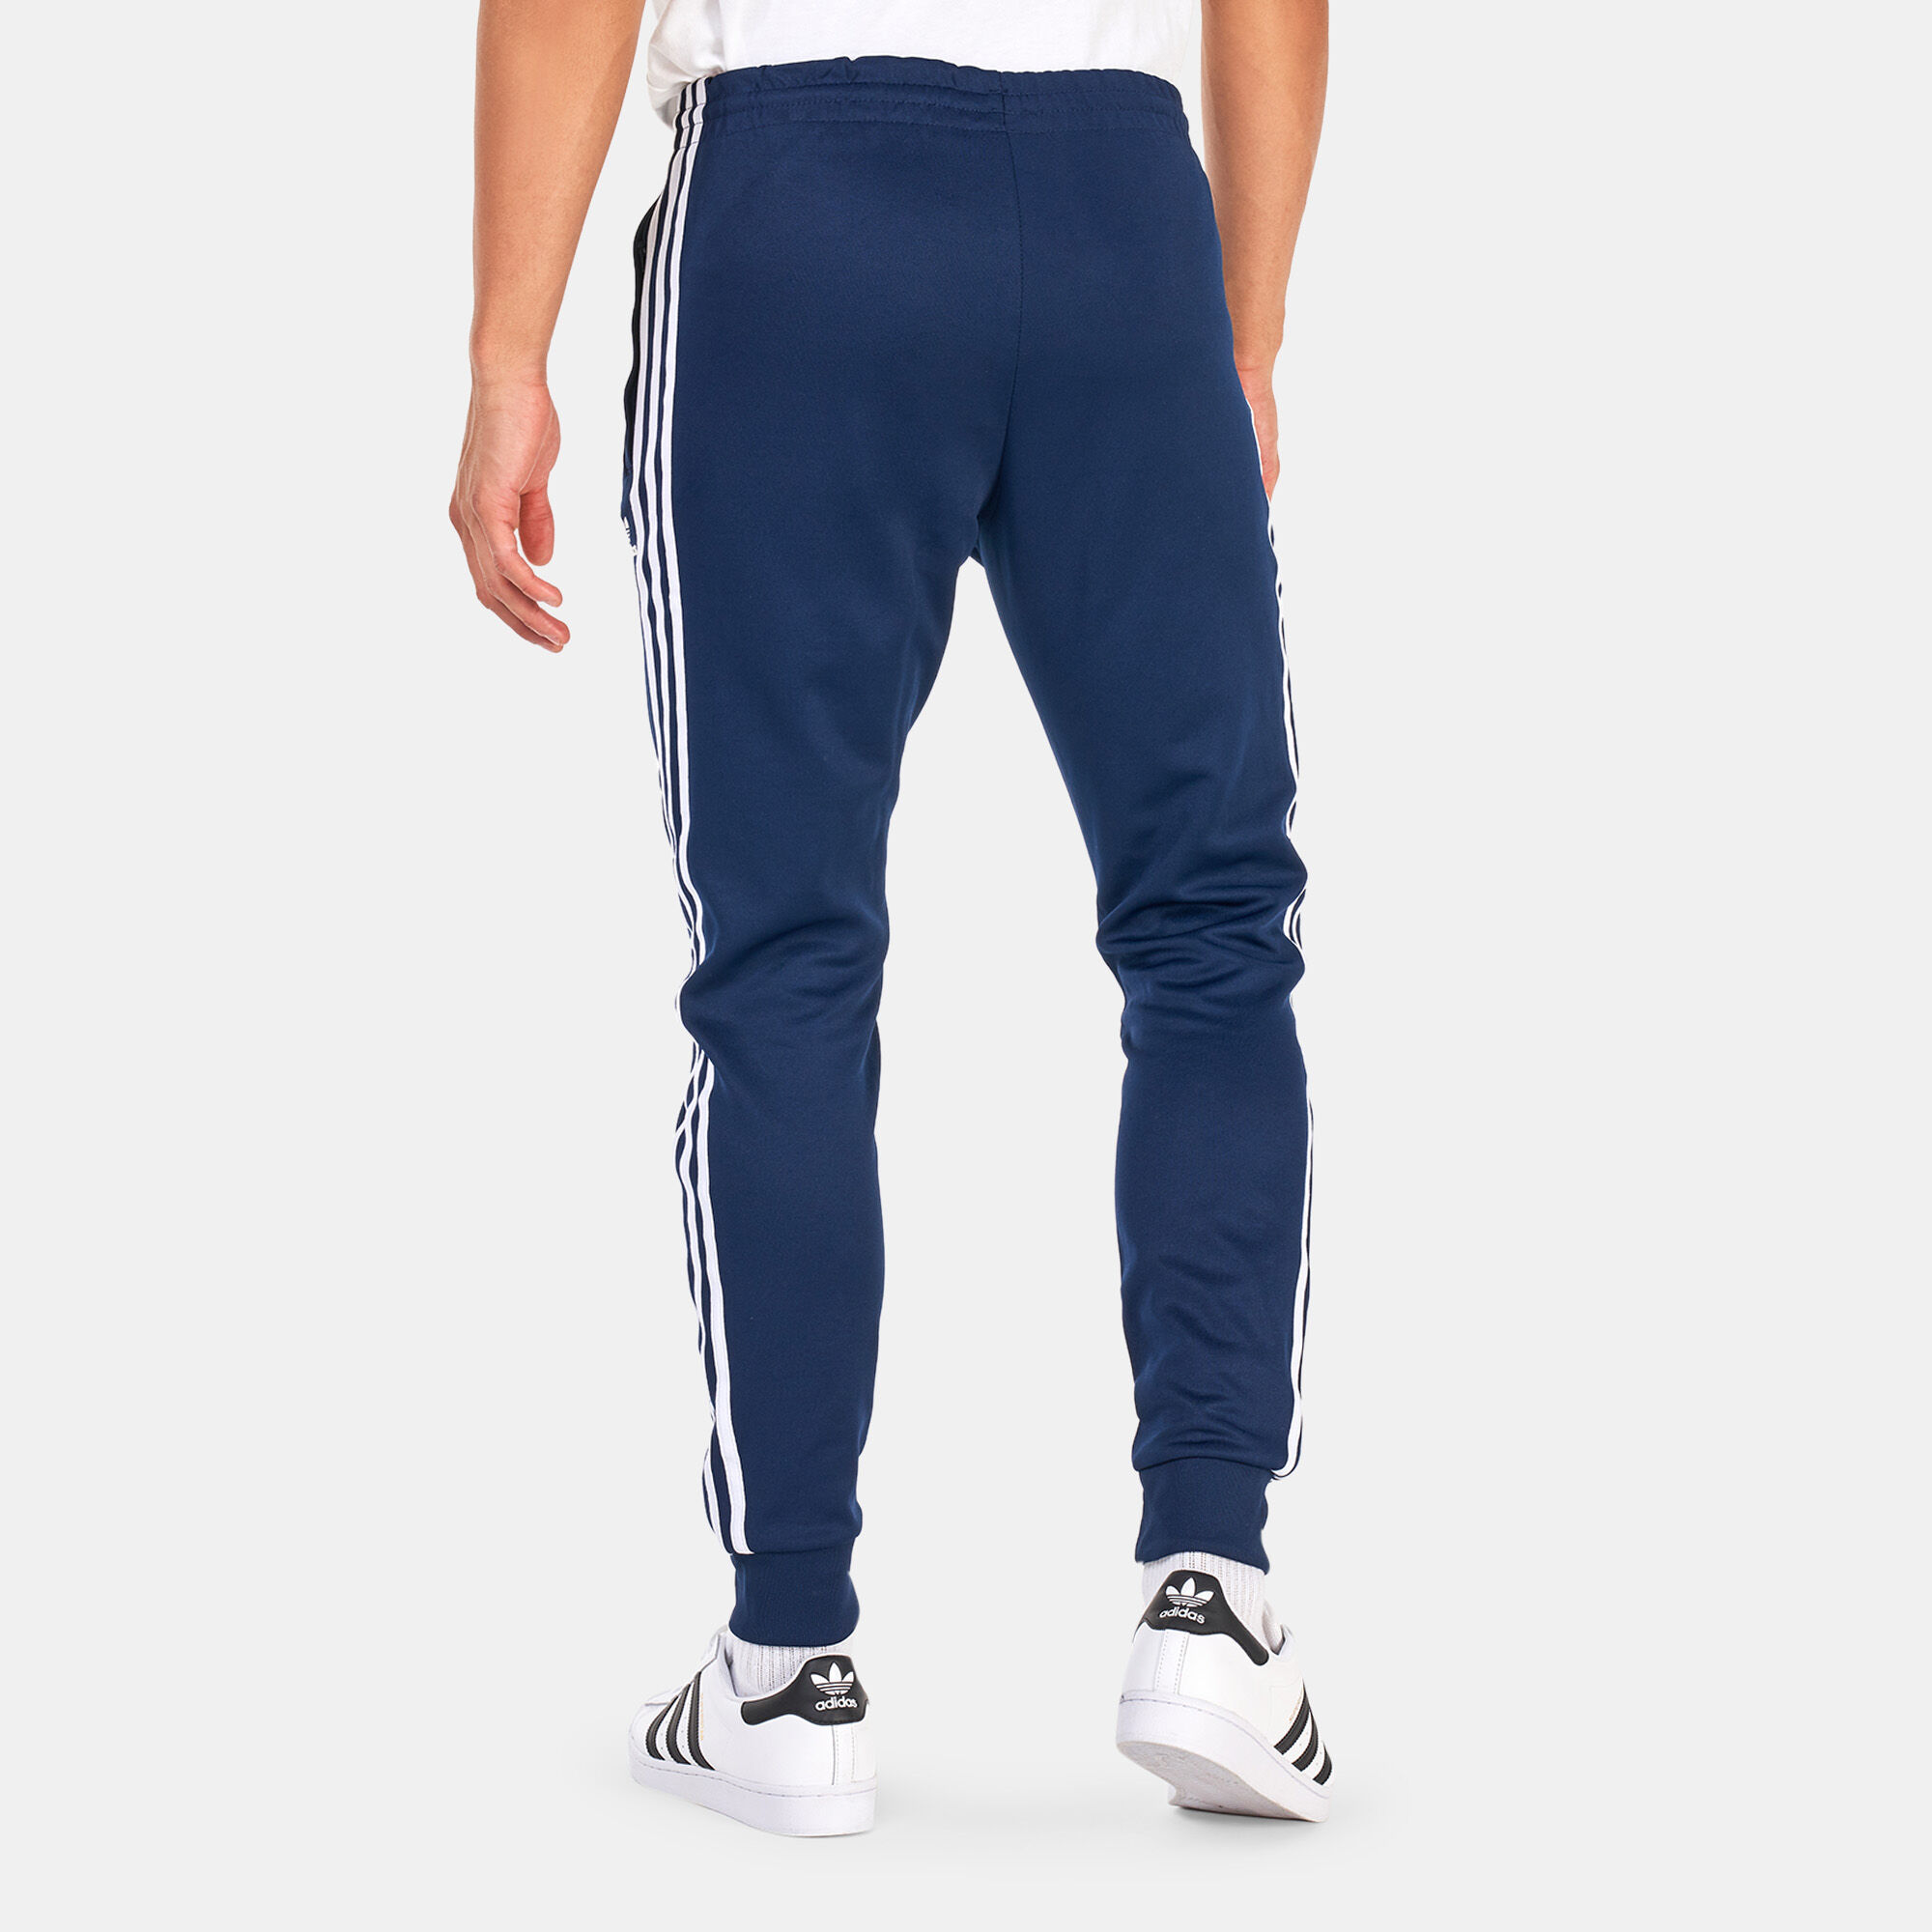 Mens Adidas Climate Track Pants ~ Size XL Navy Blue Measures 34 x 33 | eBay